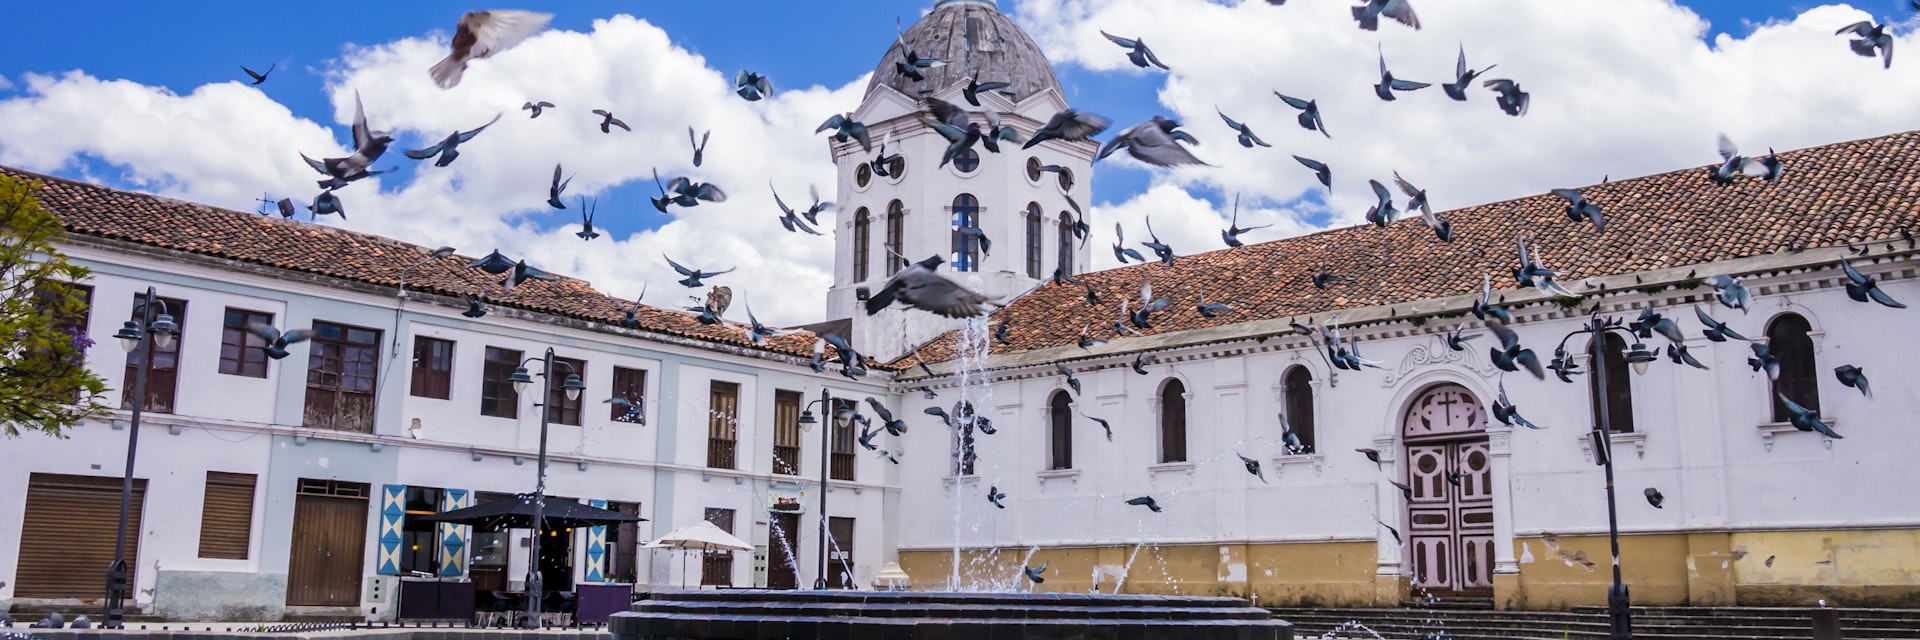 Ecuador, Cuenca city center, scenic view of San Sebastian church with fountain in foreground